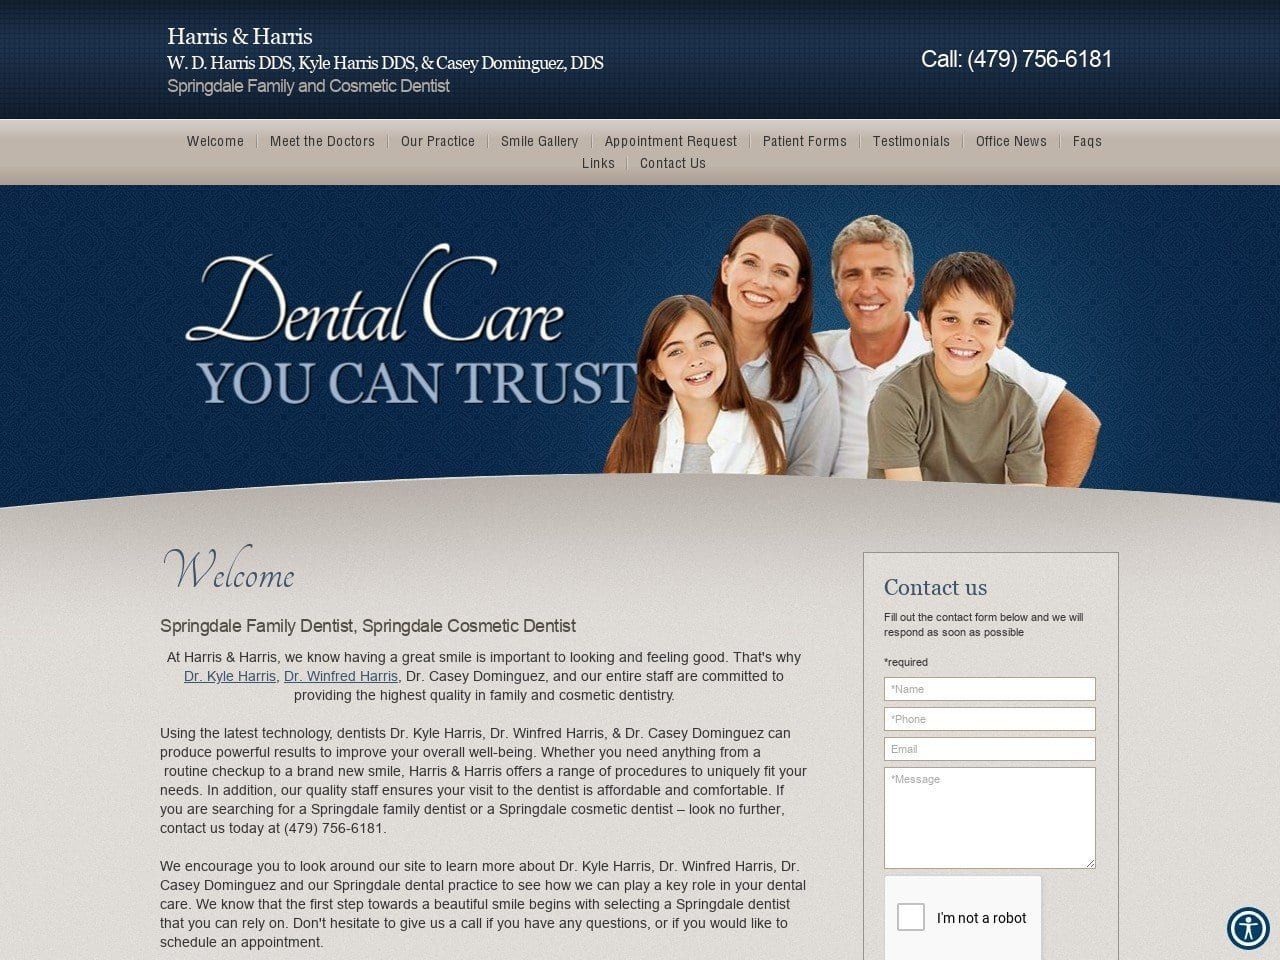 Springdale Family Dentist Website Screenshot from springdalefamilydentist.com